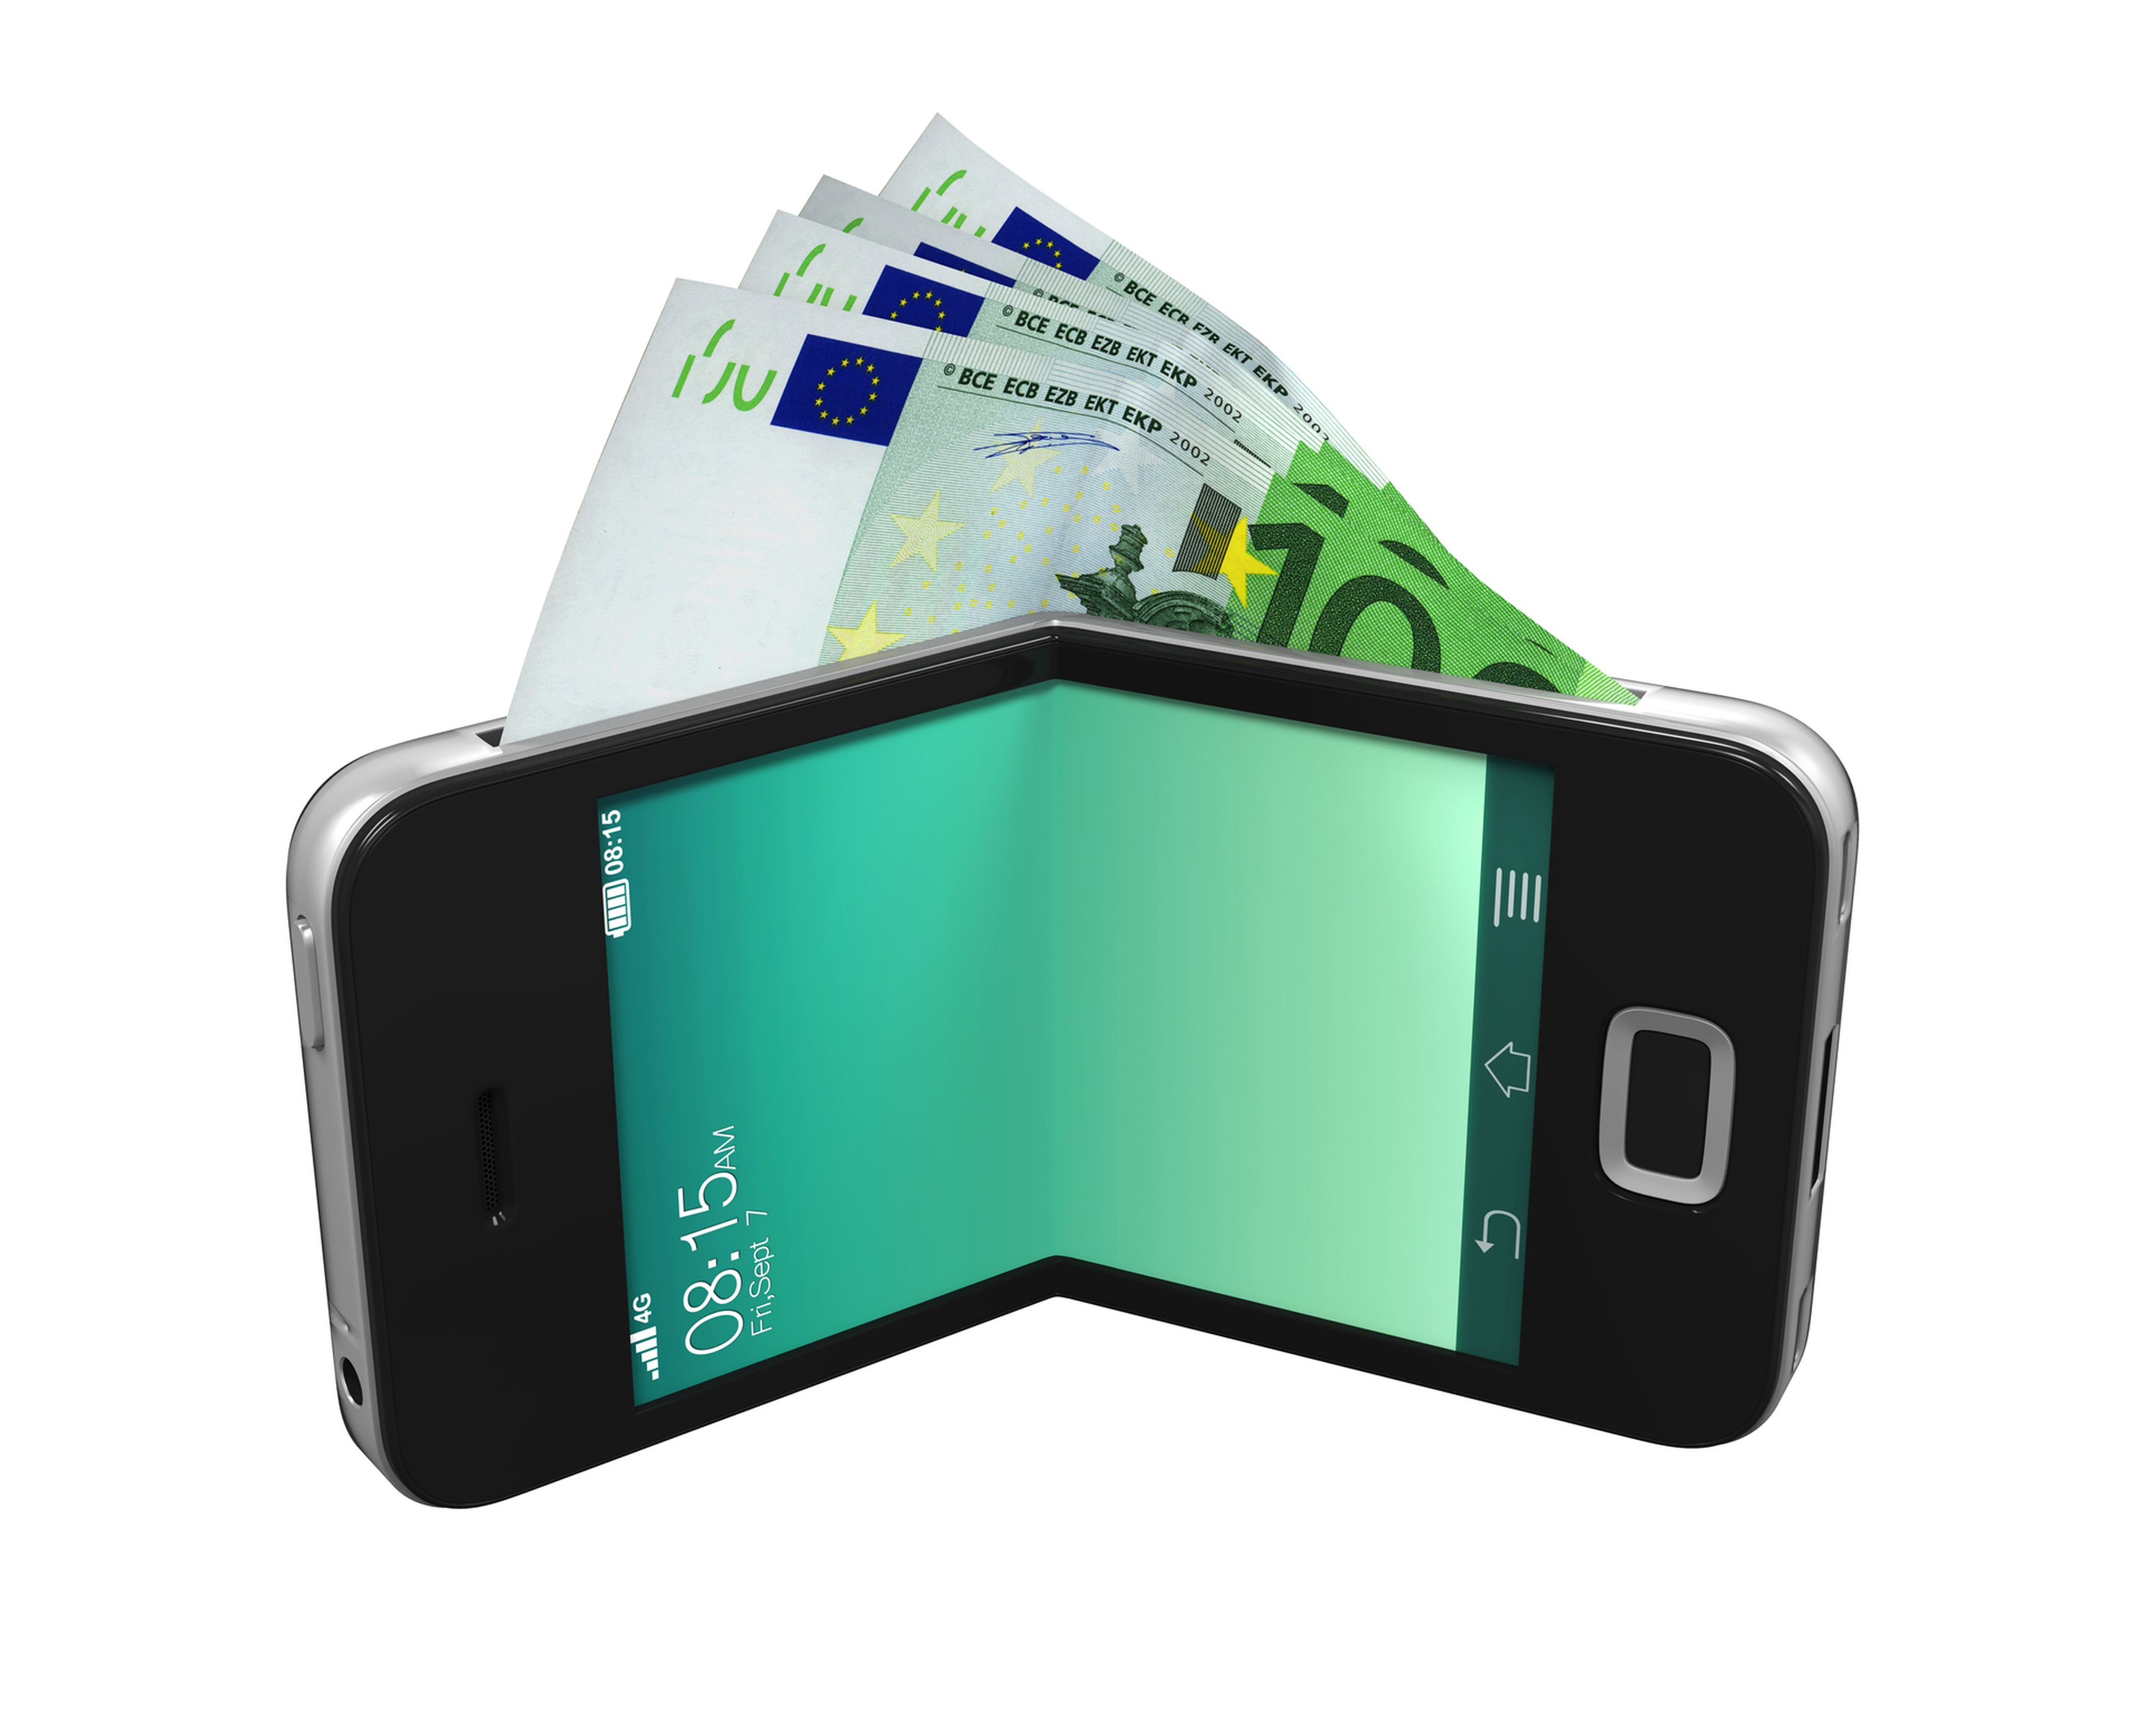 Varios billetes de 100 euros salen de un teléfono móvil.